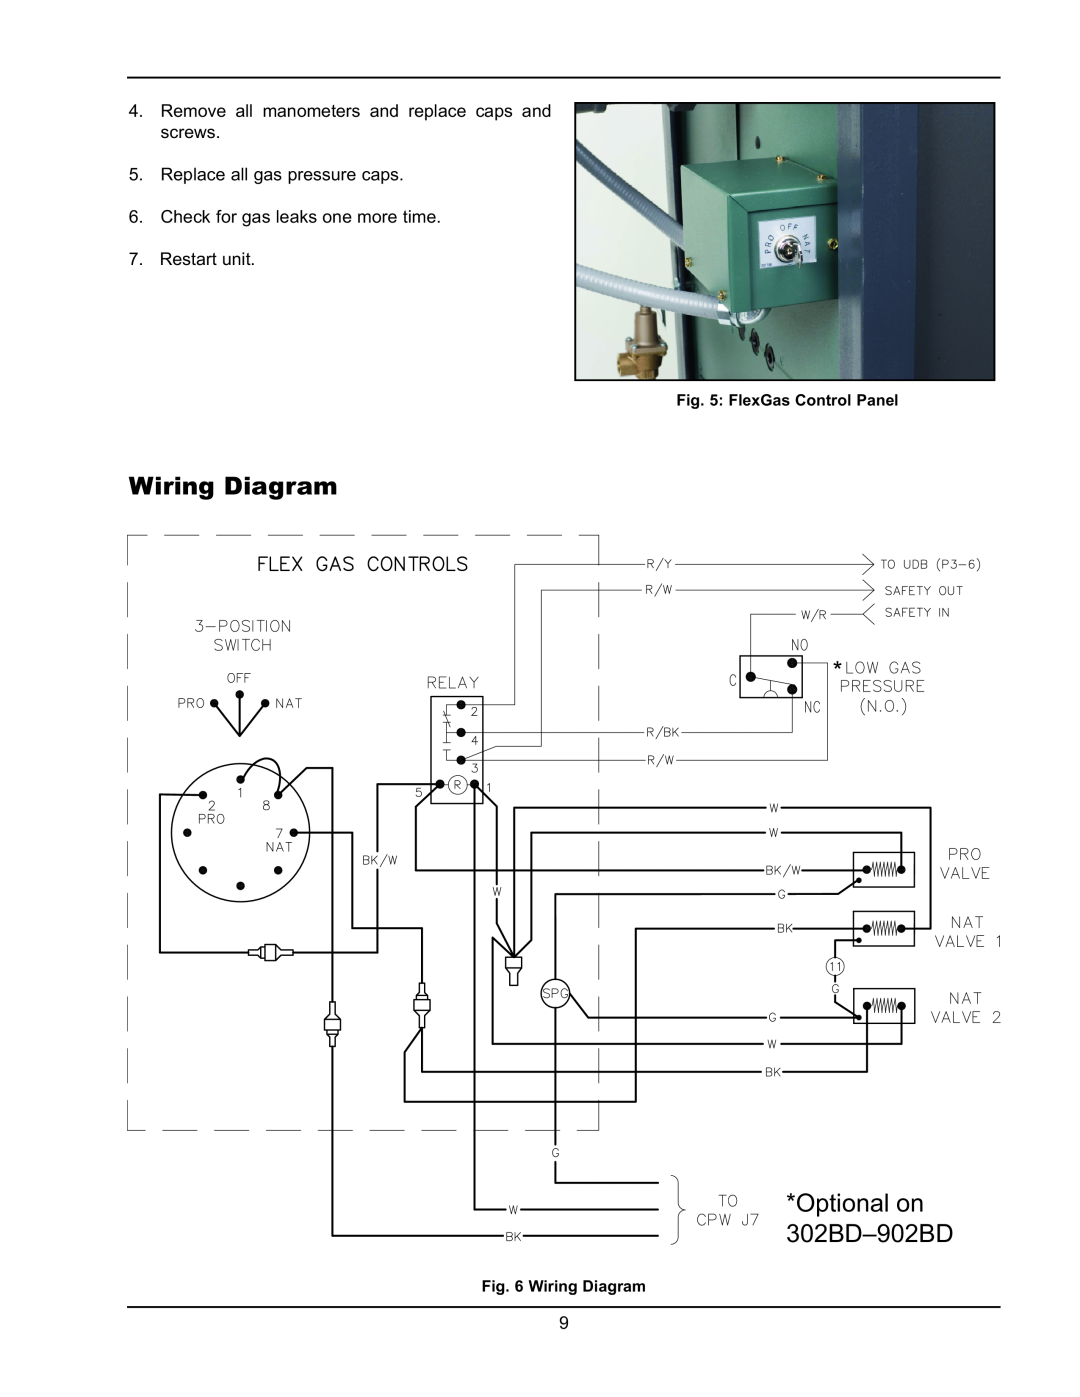 Raypak 302BD-2342BD instruction manual Wiring Diagram, Optional on 302BD-902BD, FlexGas Control Panel 